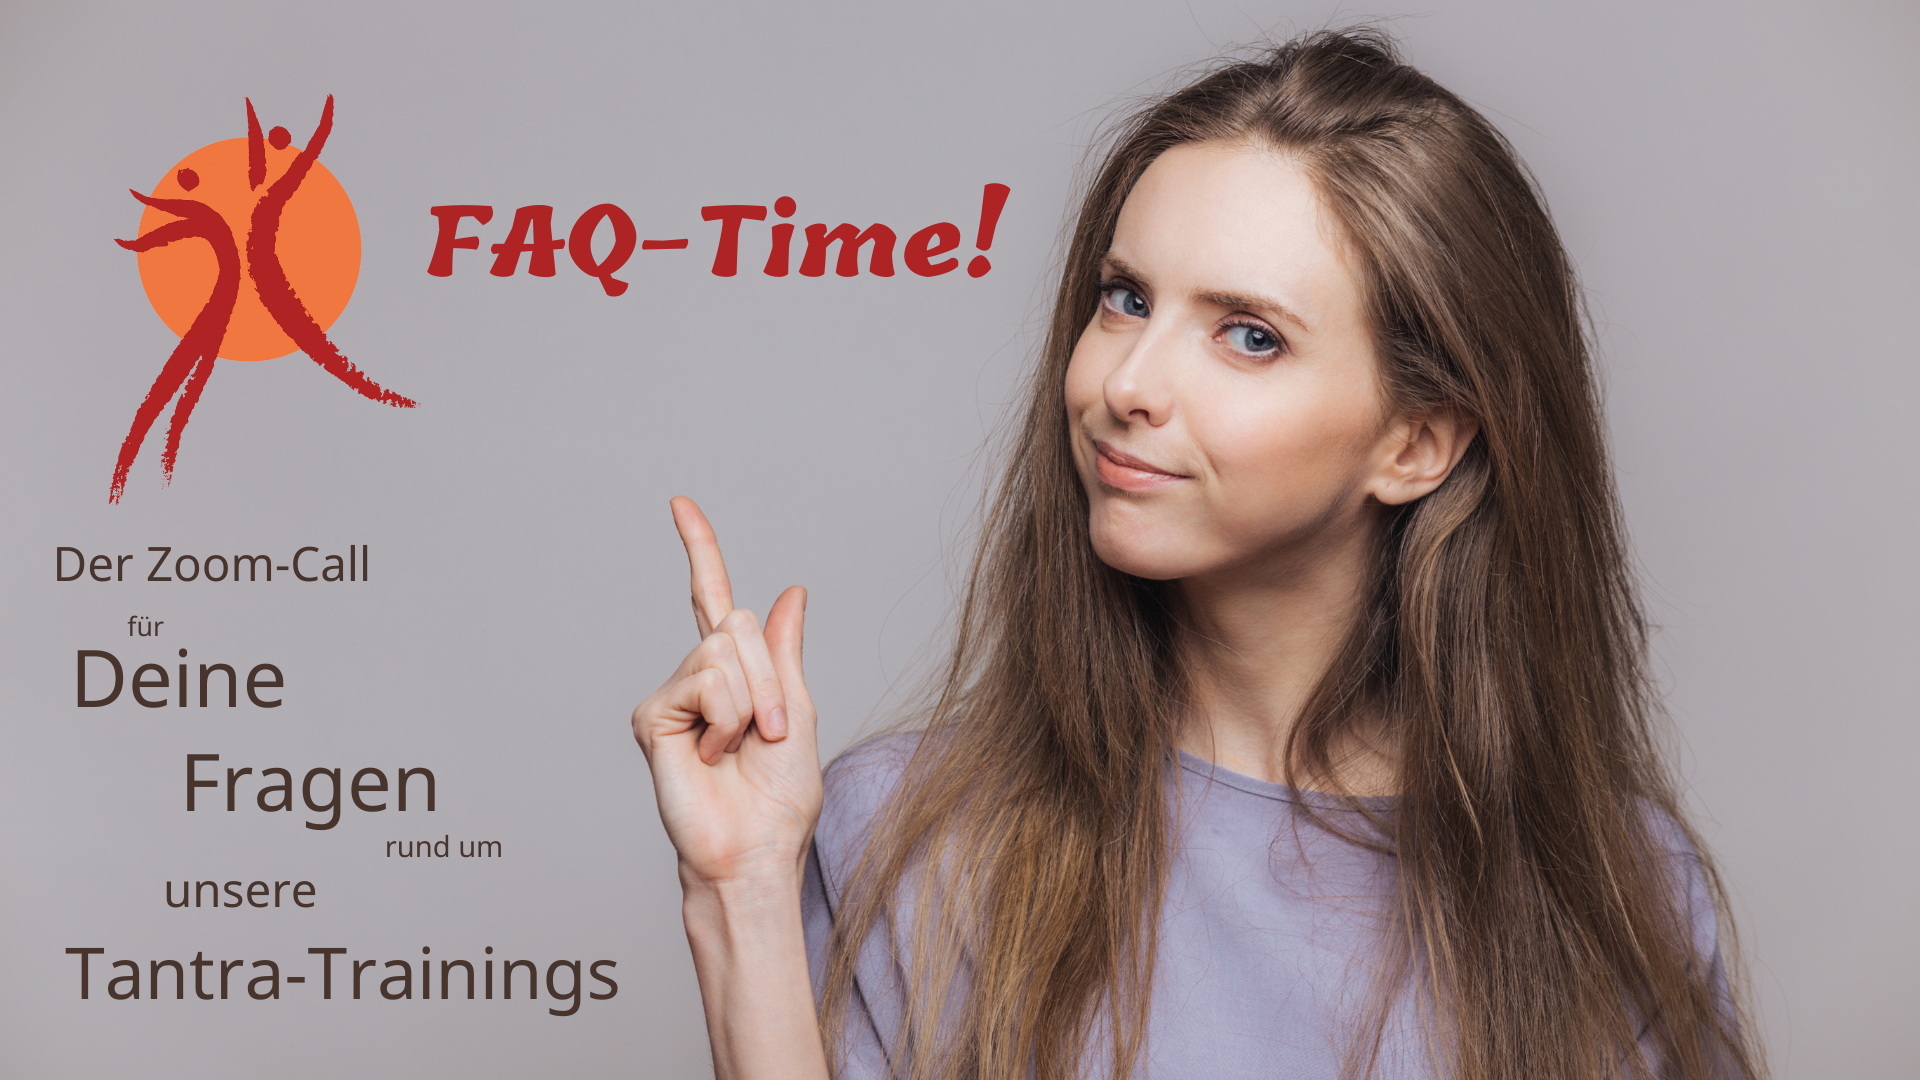 FAQ-Time!